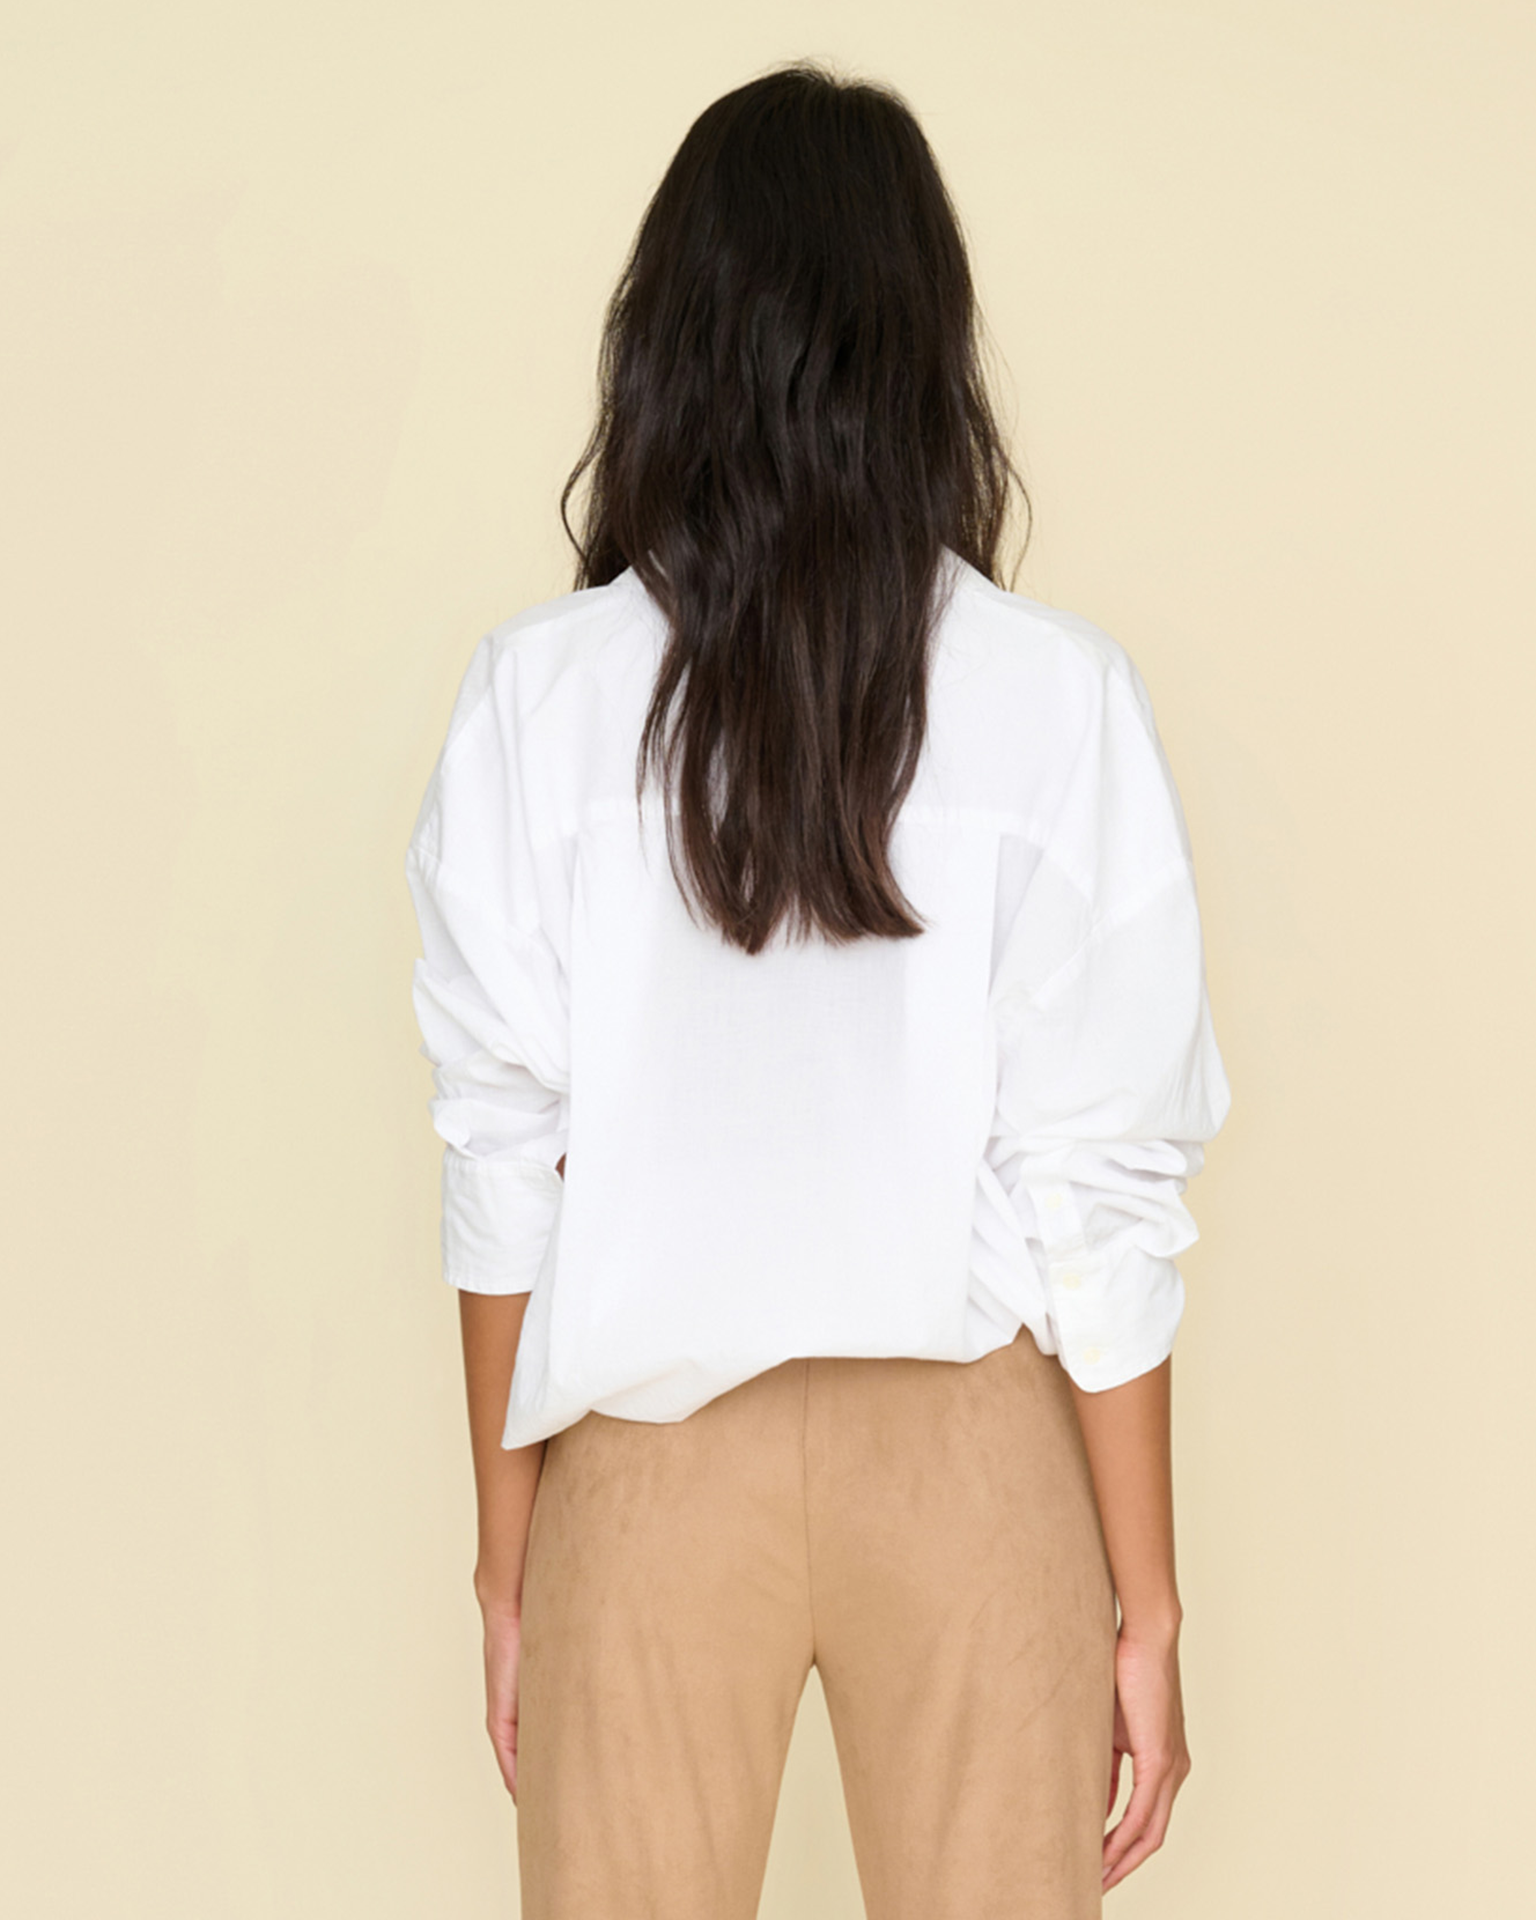 XiRENA Sydney Shirt in White - Bliss